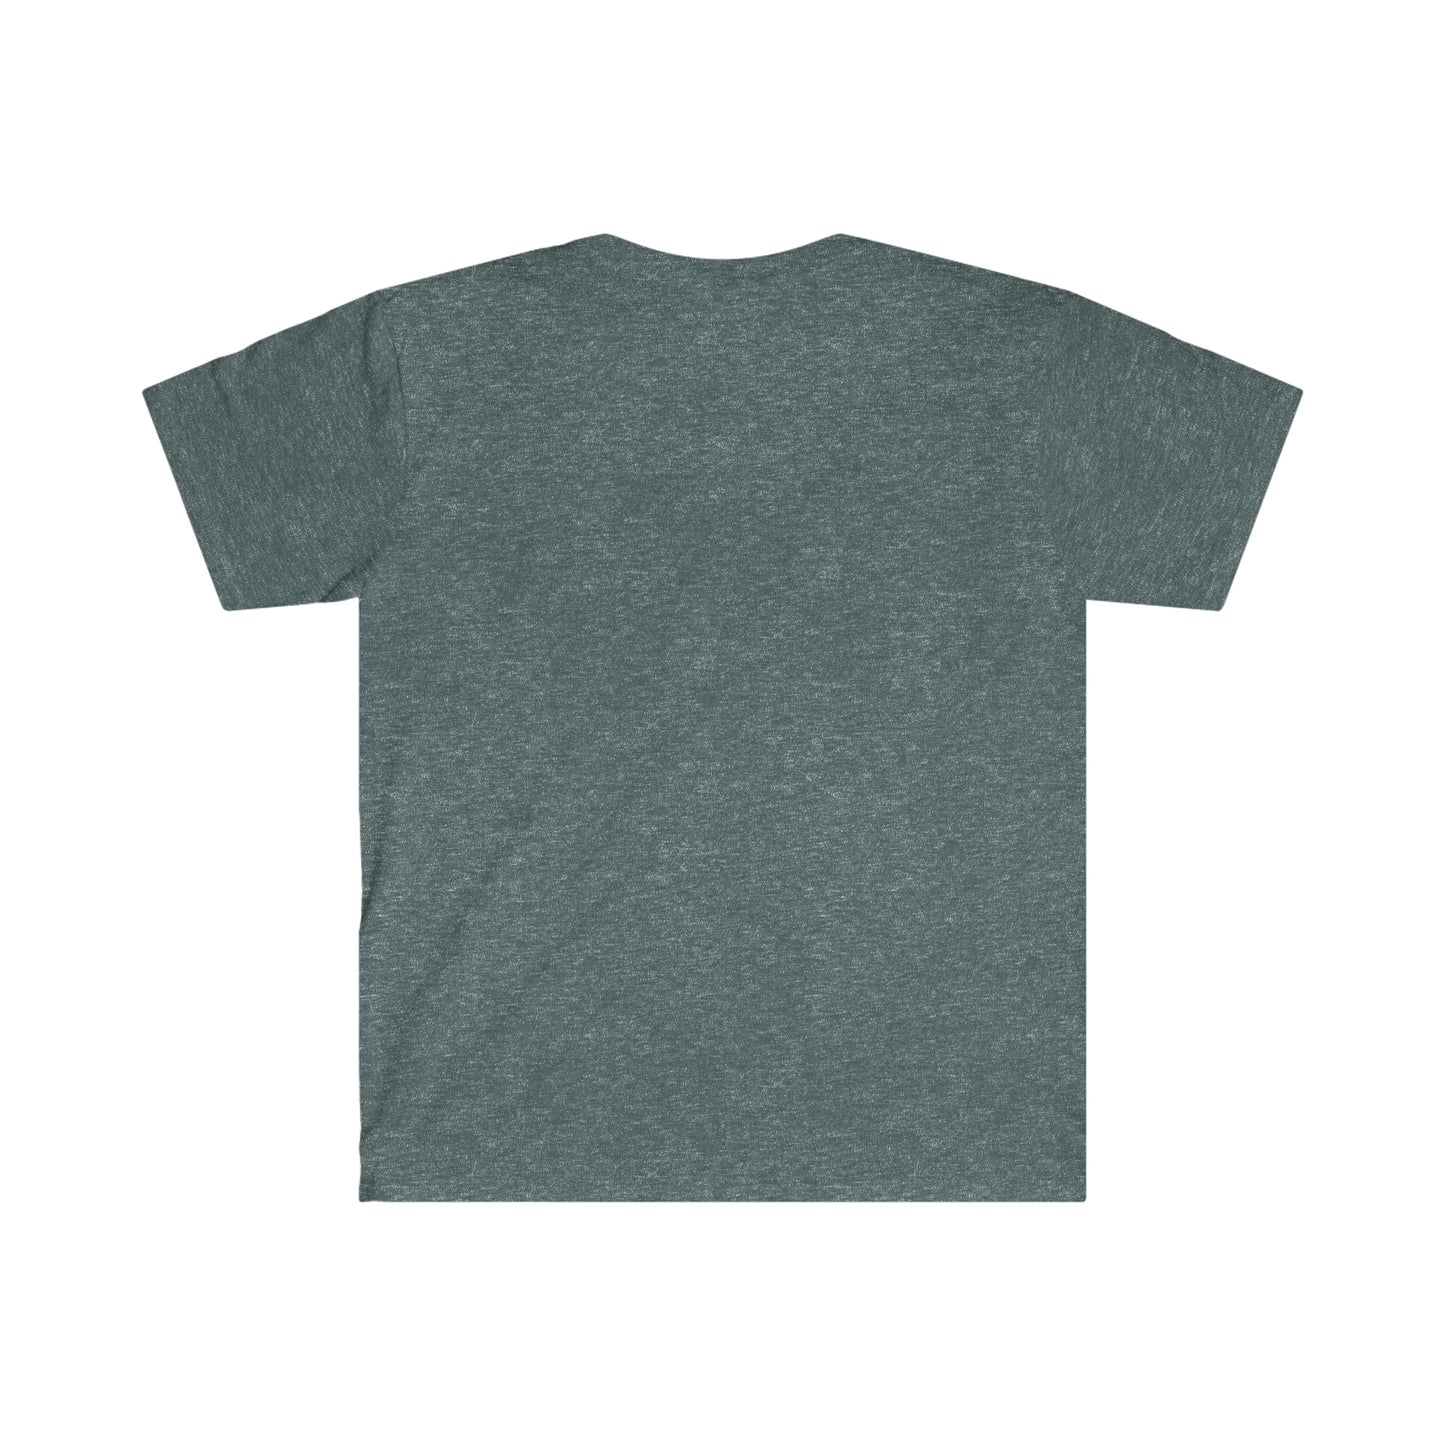 "If It's Not TMI, It's Small Talk" Unisex Softstyle T-Shirt